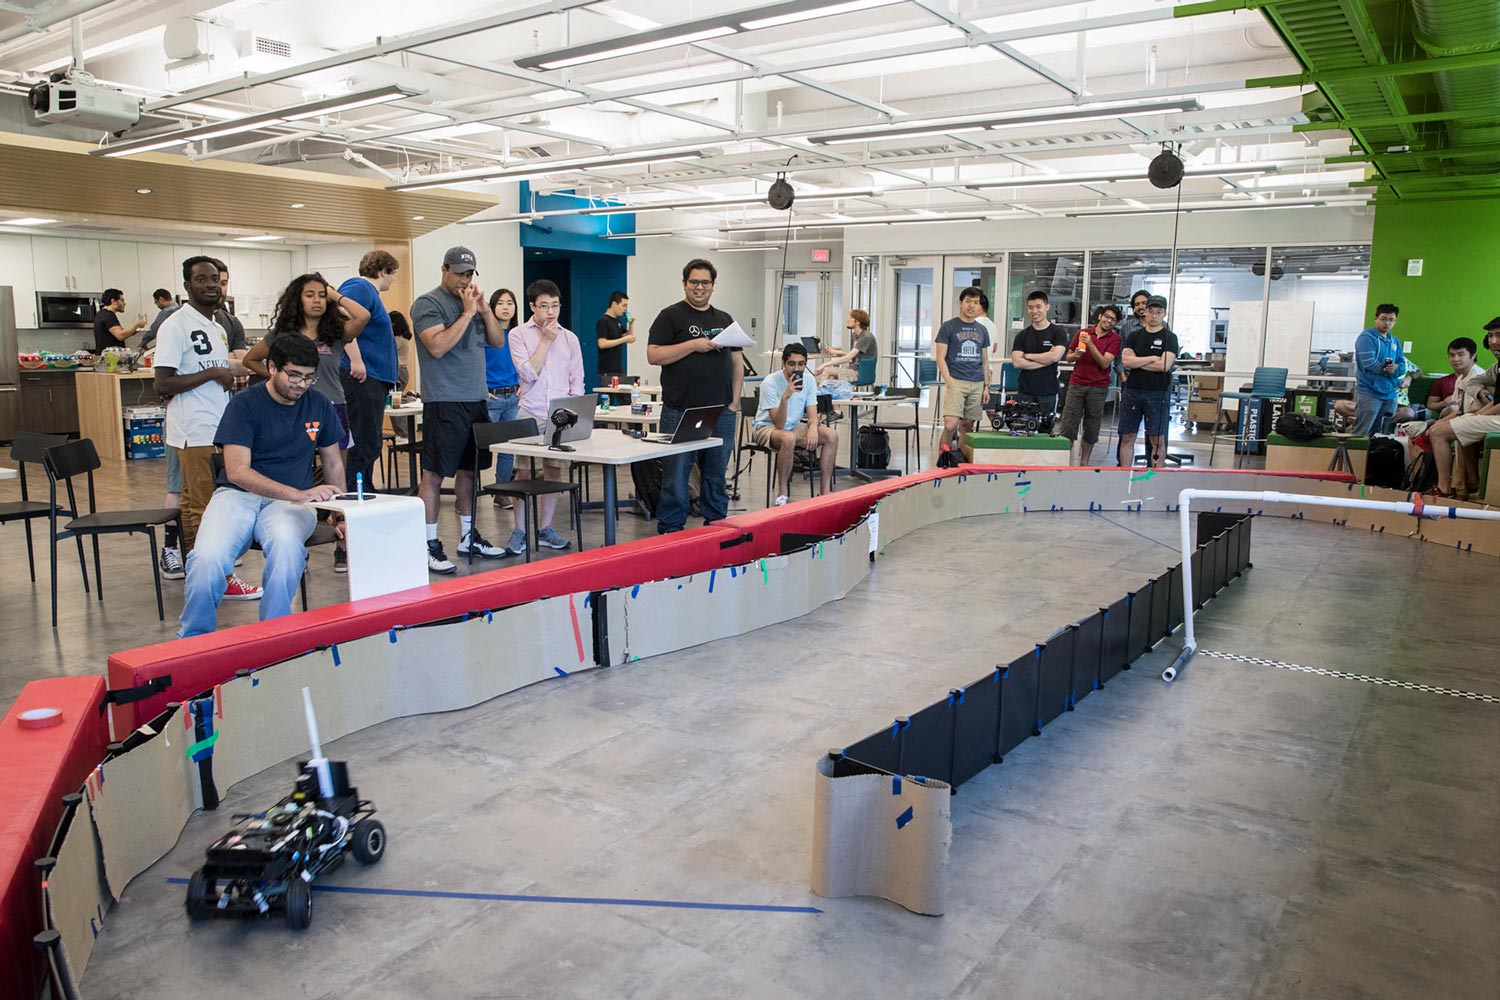 Students racing an autonomous car on a track